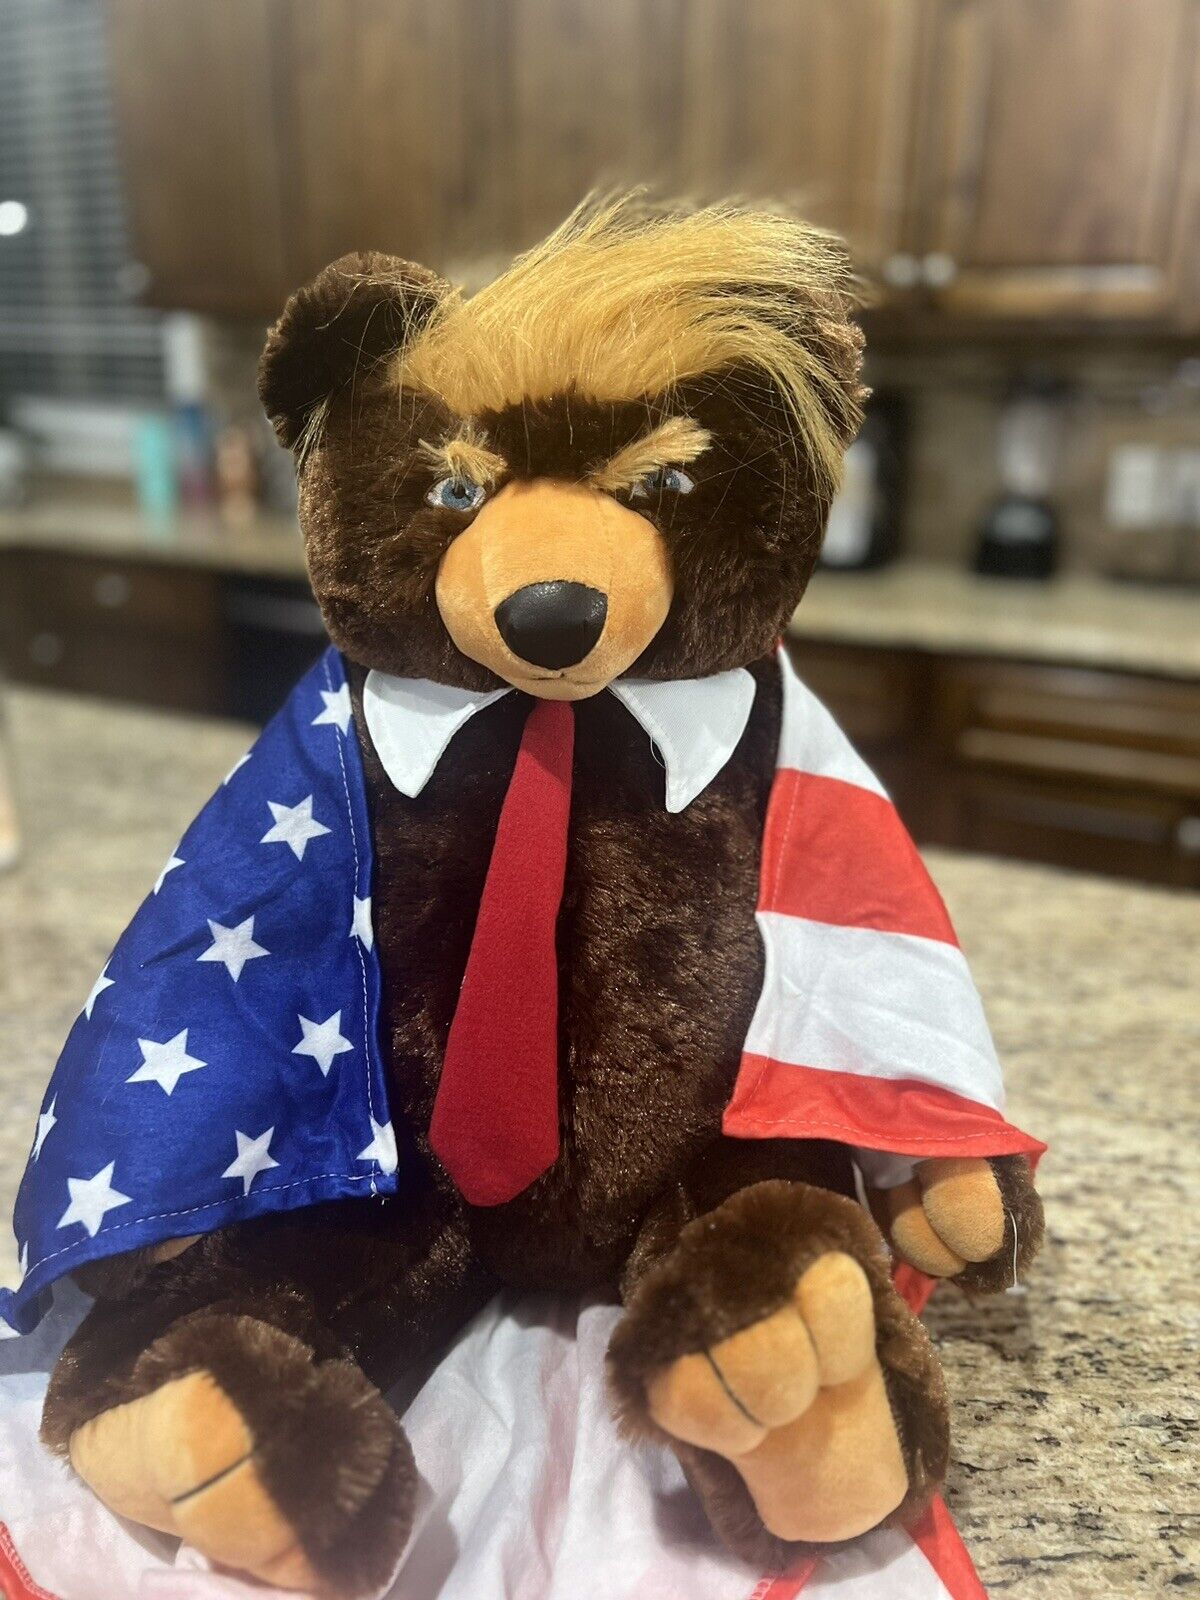 TRUMPY BEAR Deluxe 22” Donald Trump Teddy Bear Plush With American Flag Cape